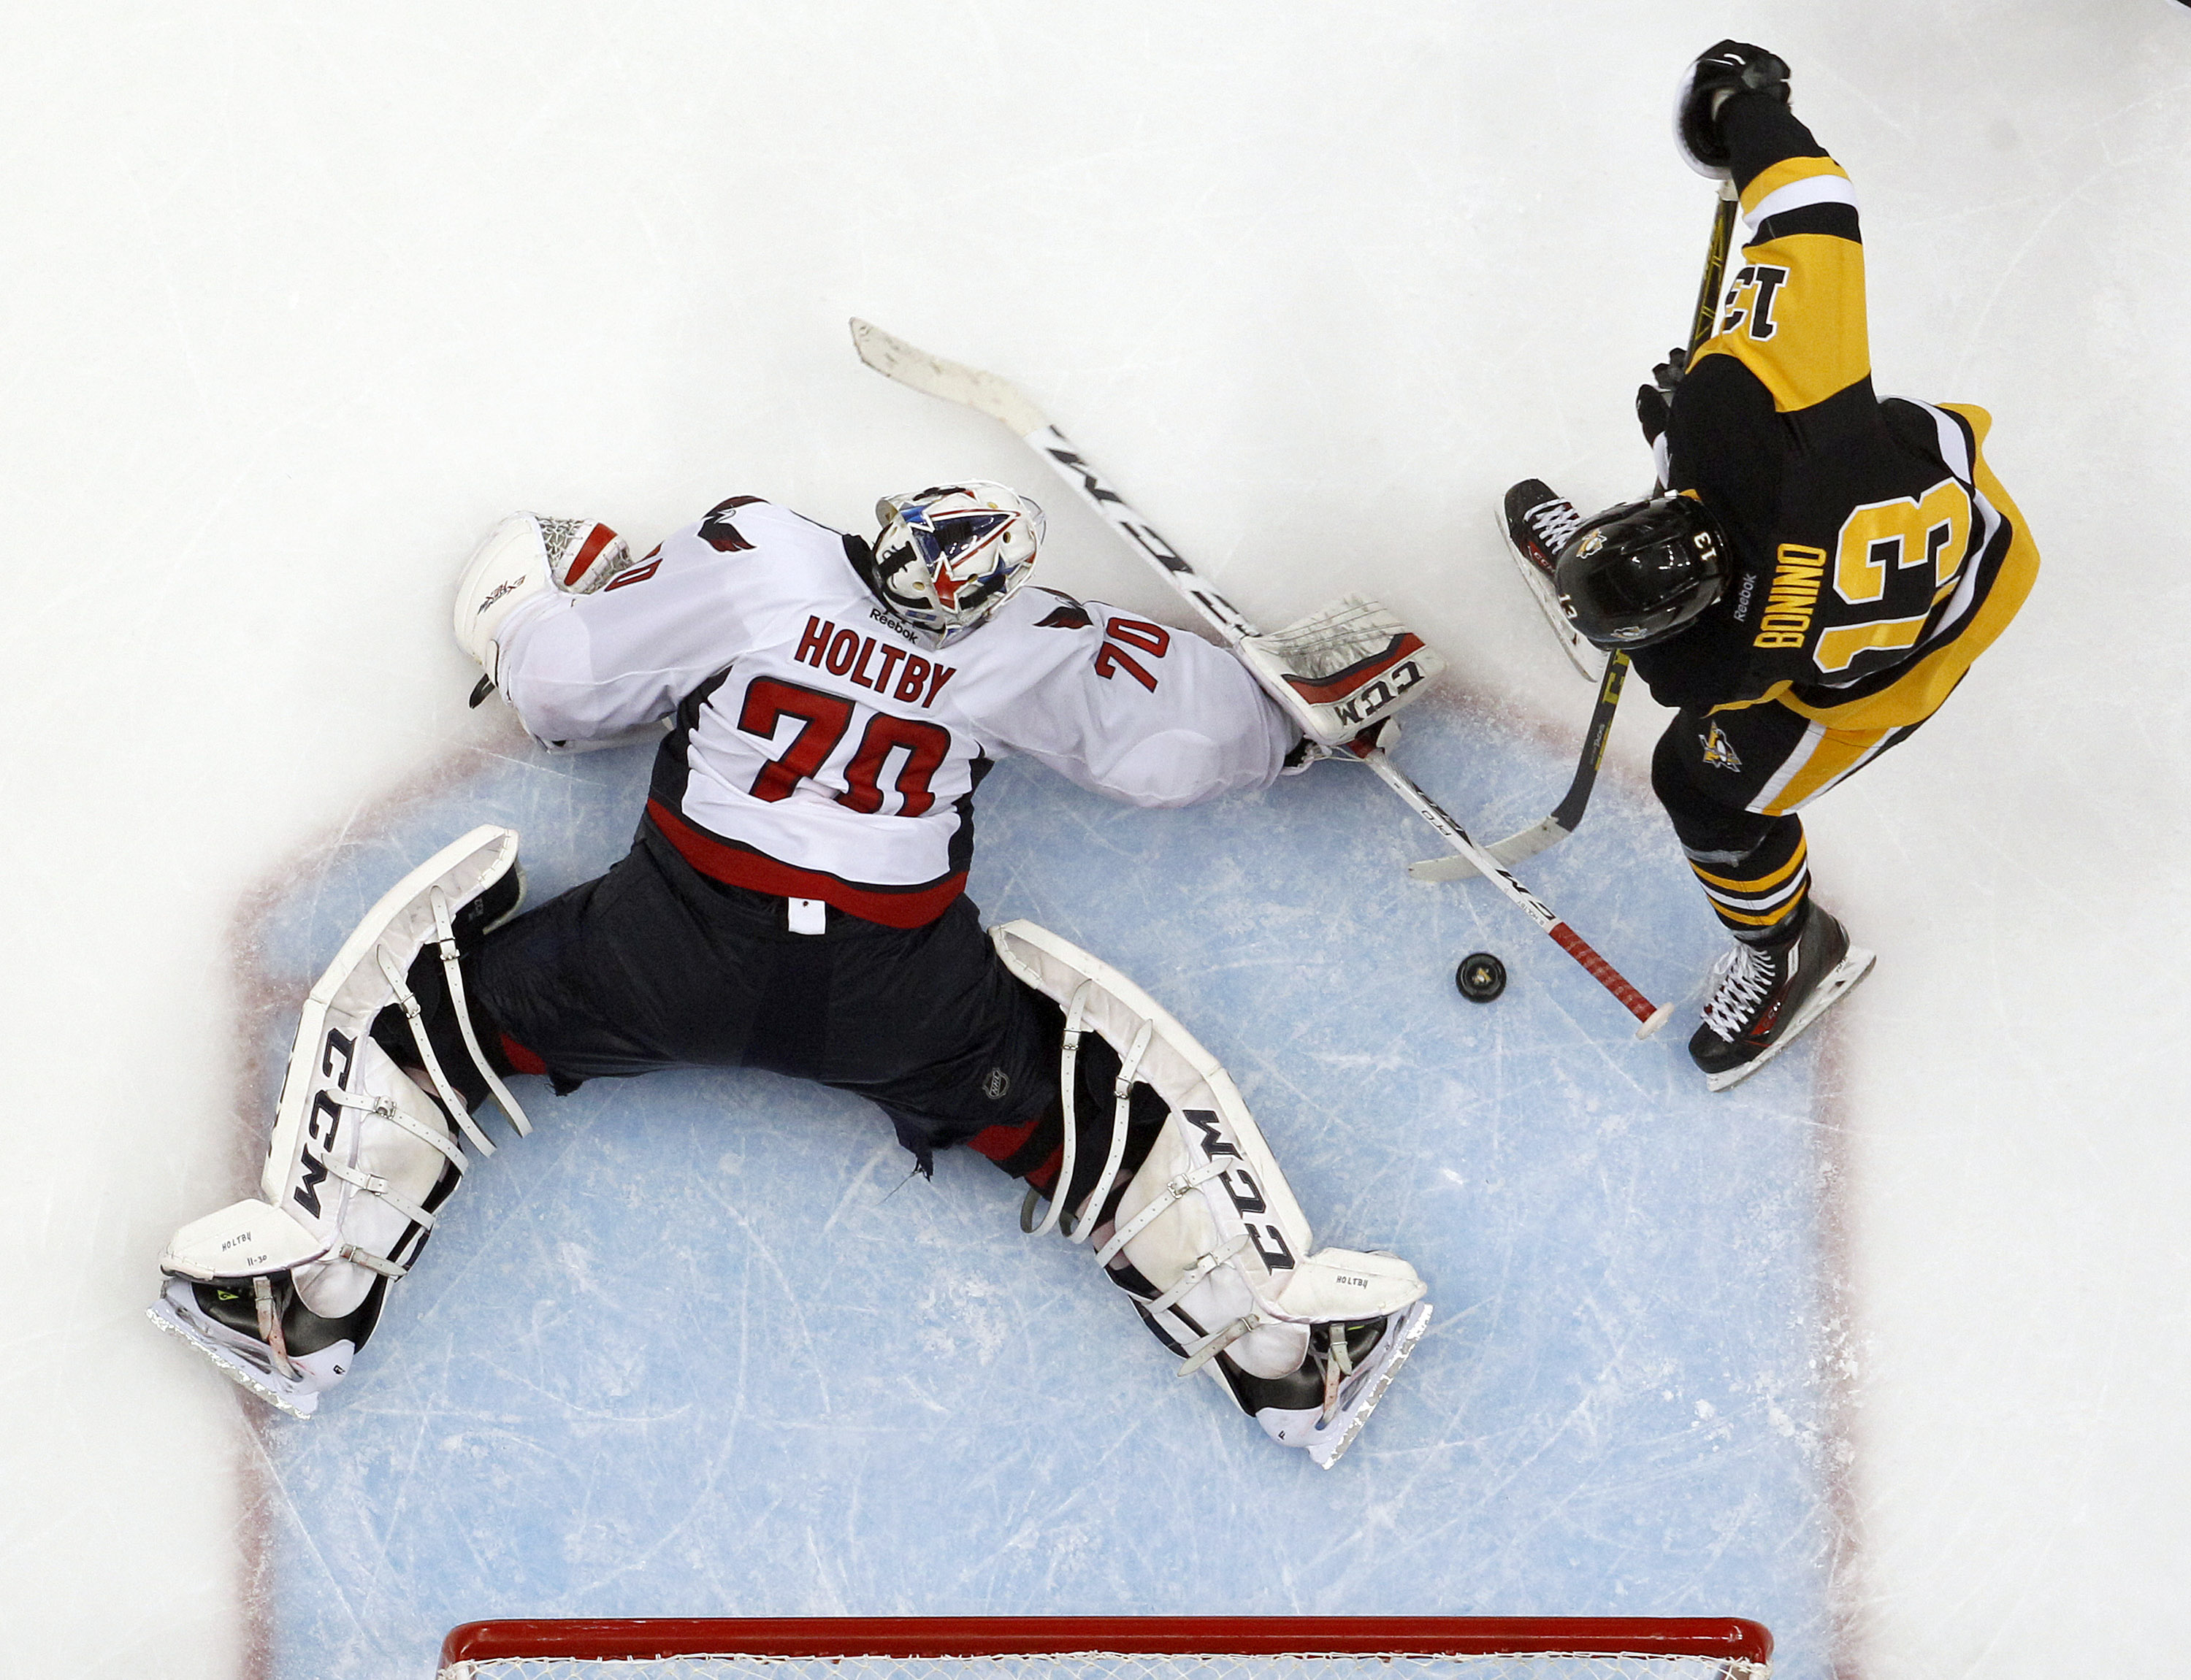 Washington Capitals v Pittsburgh Penguins - Game Six